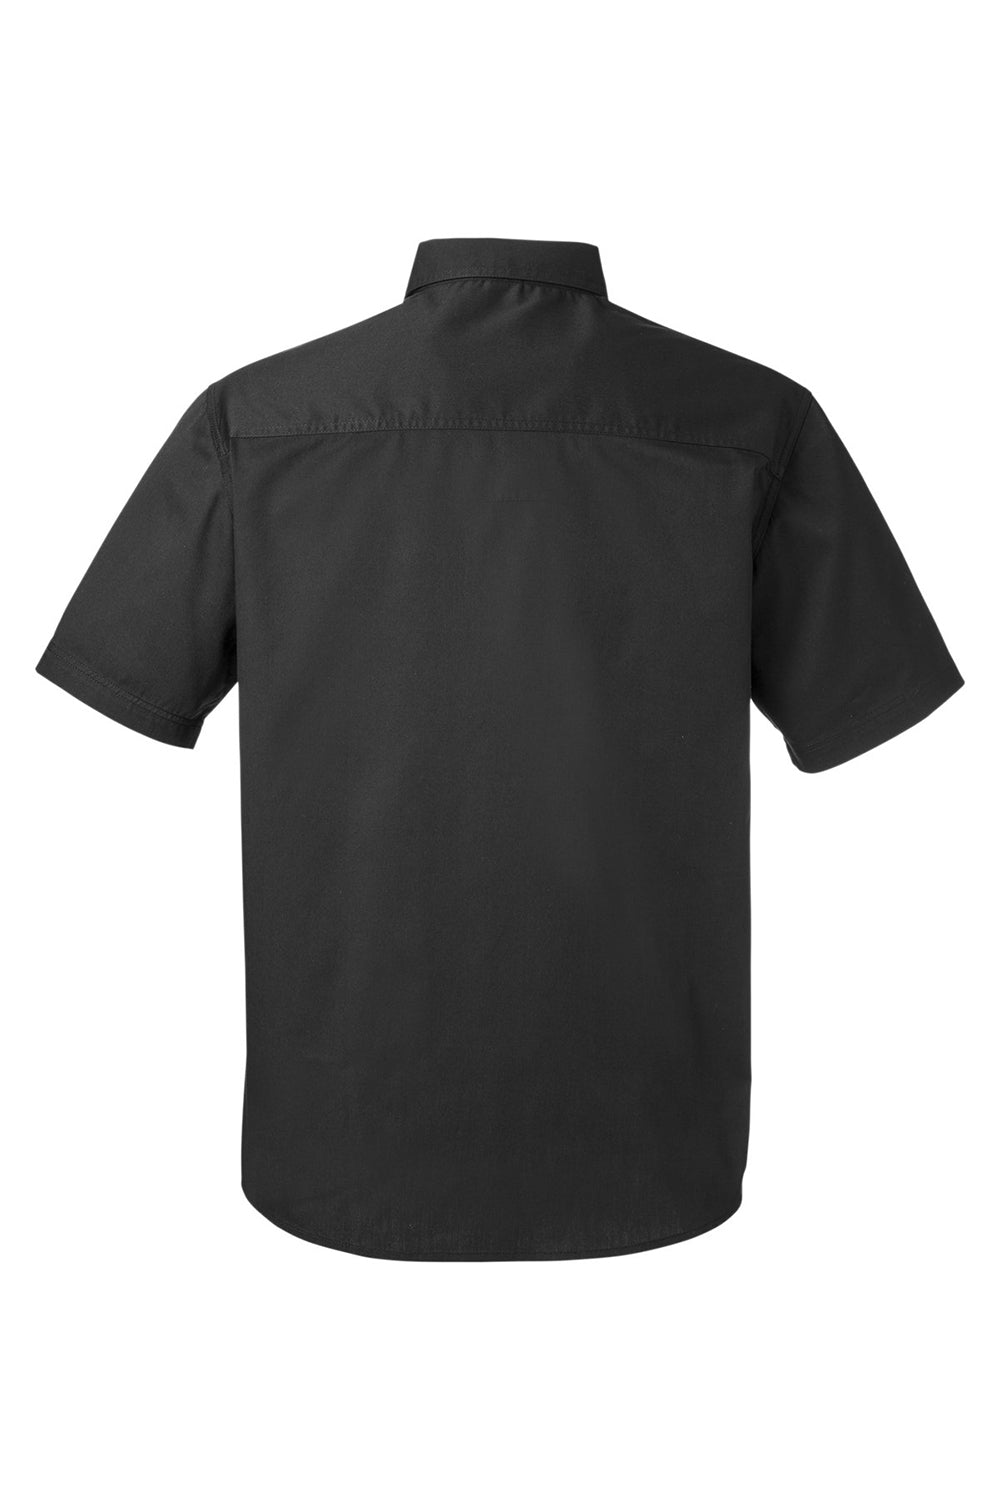 Harriton M585 Mens Advantage Short Sleeve Button Down Shirt w/ Double Pockets Black Flat Back